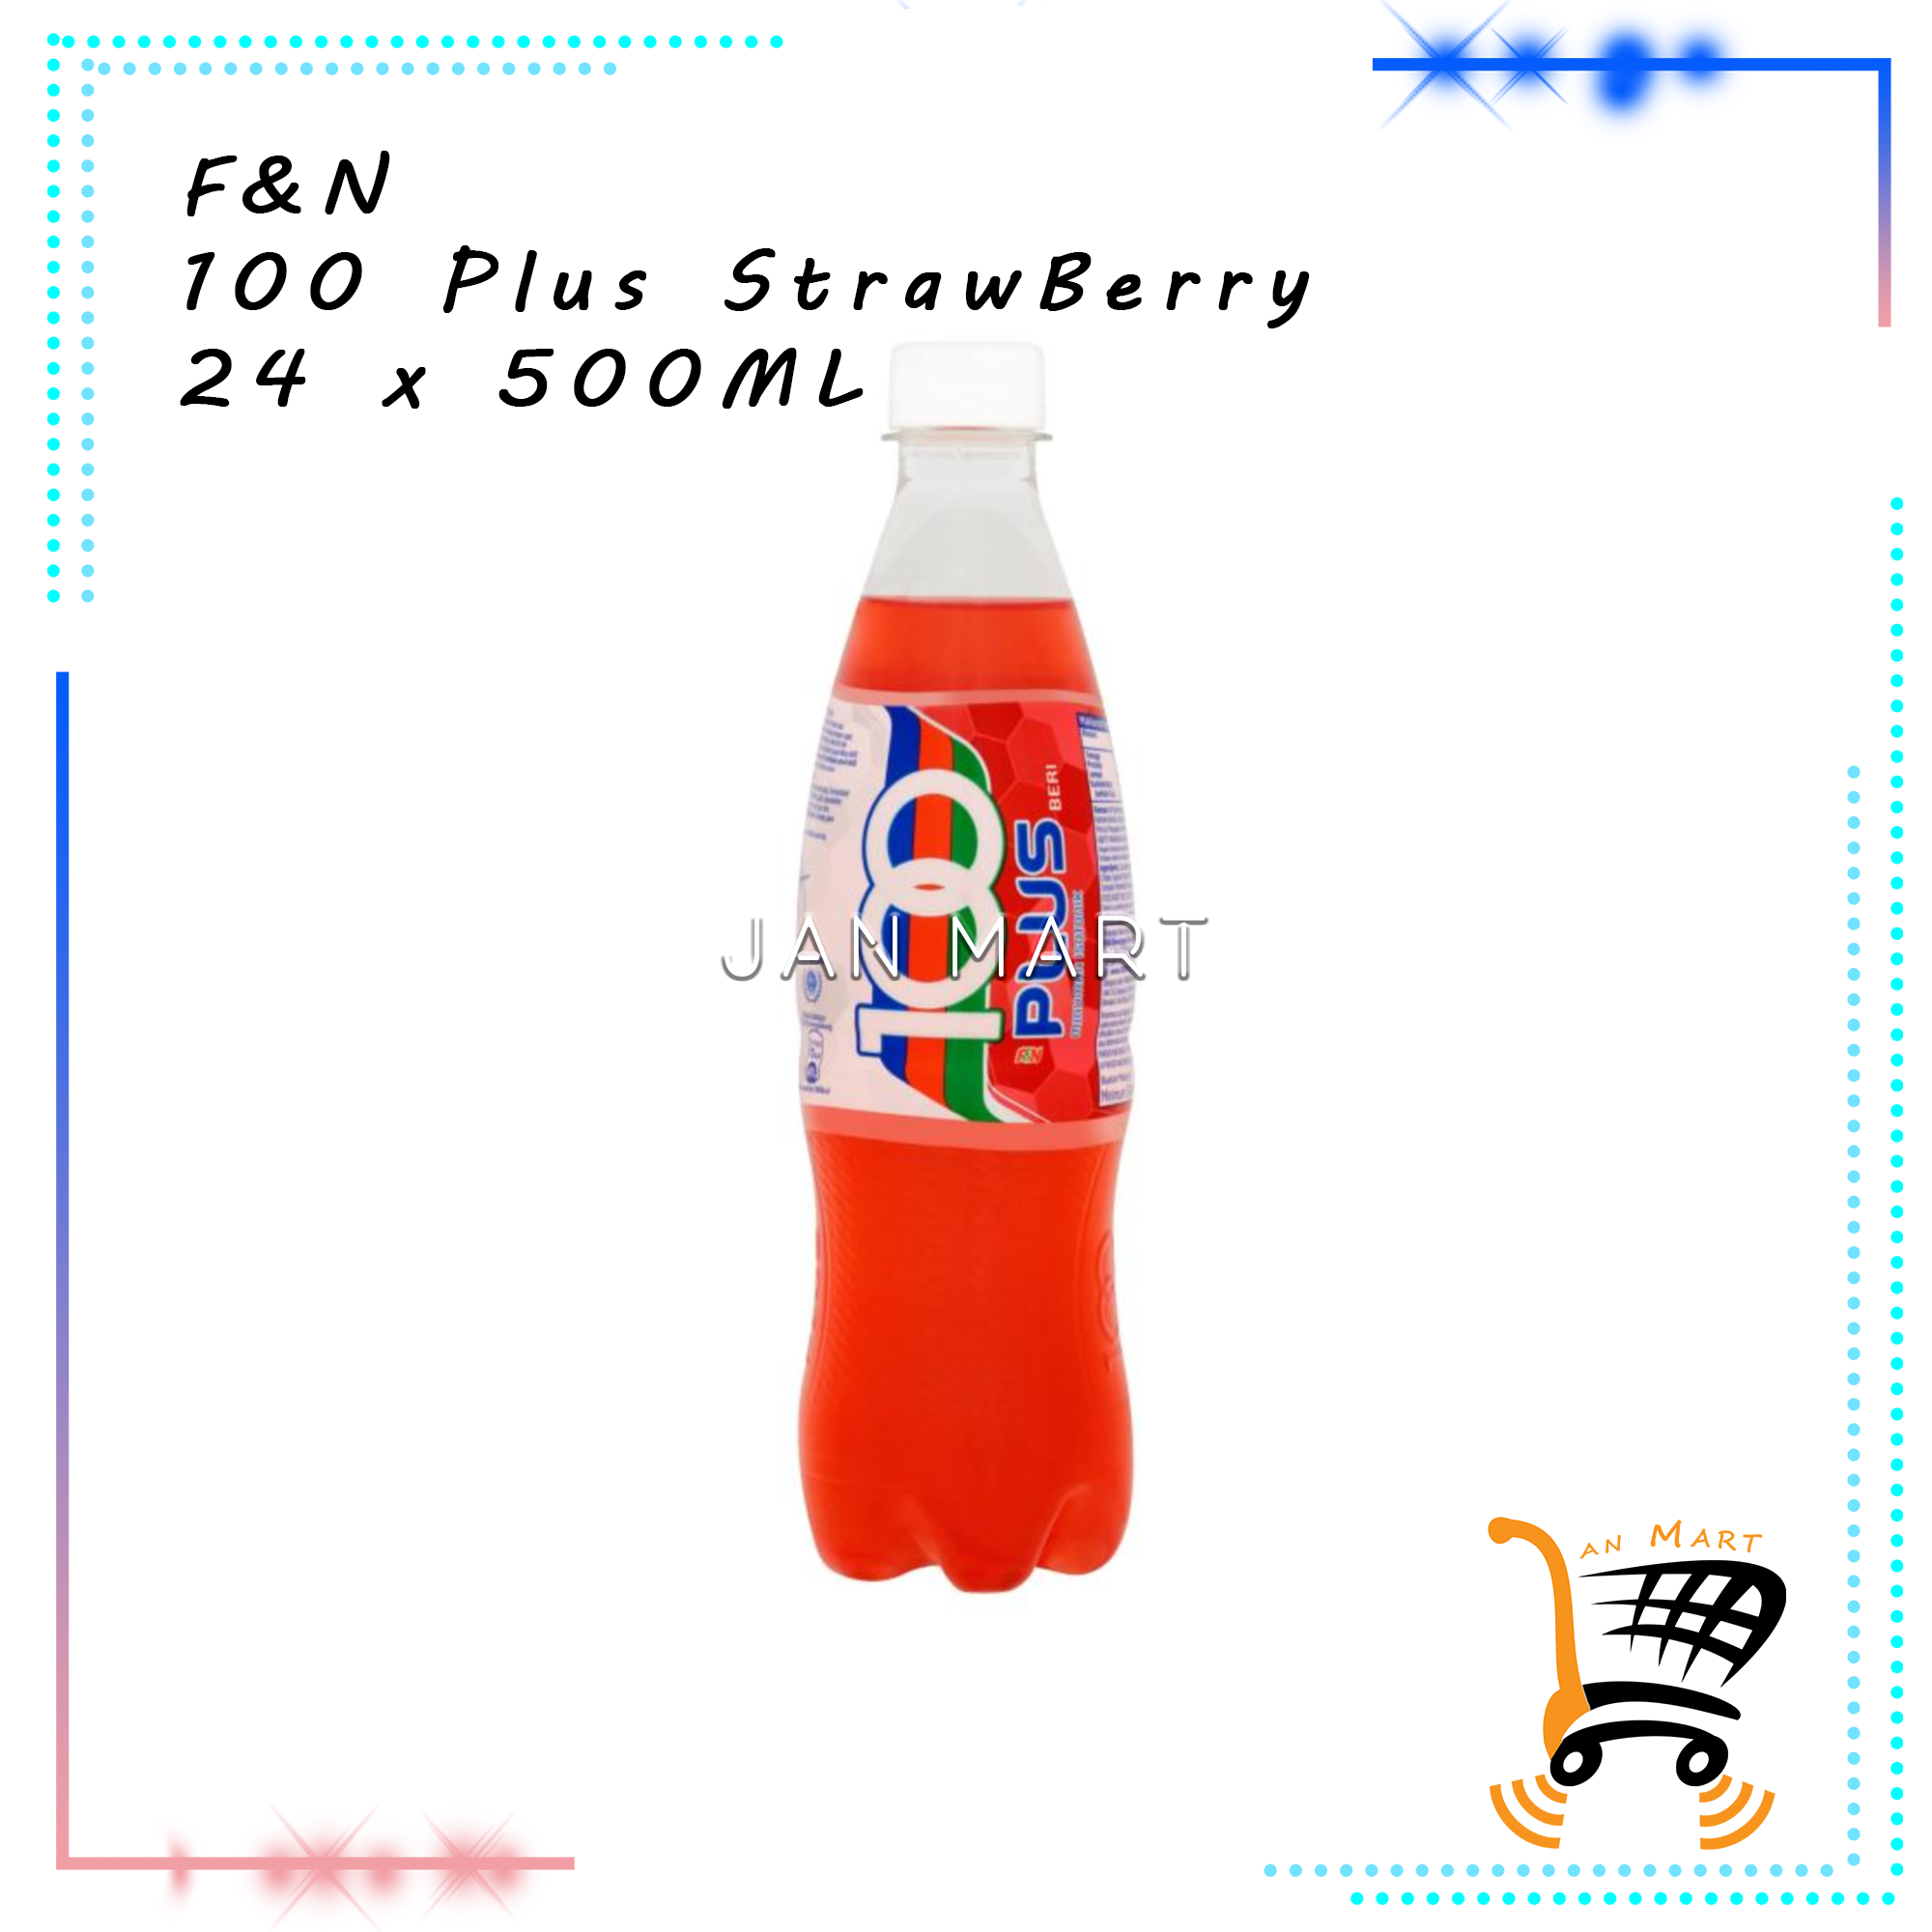 F&N 100 Plus StrawBerry 24 x 500ML